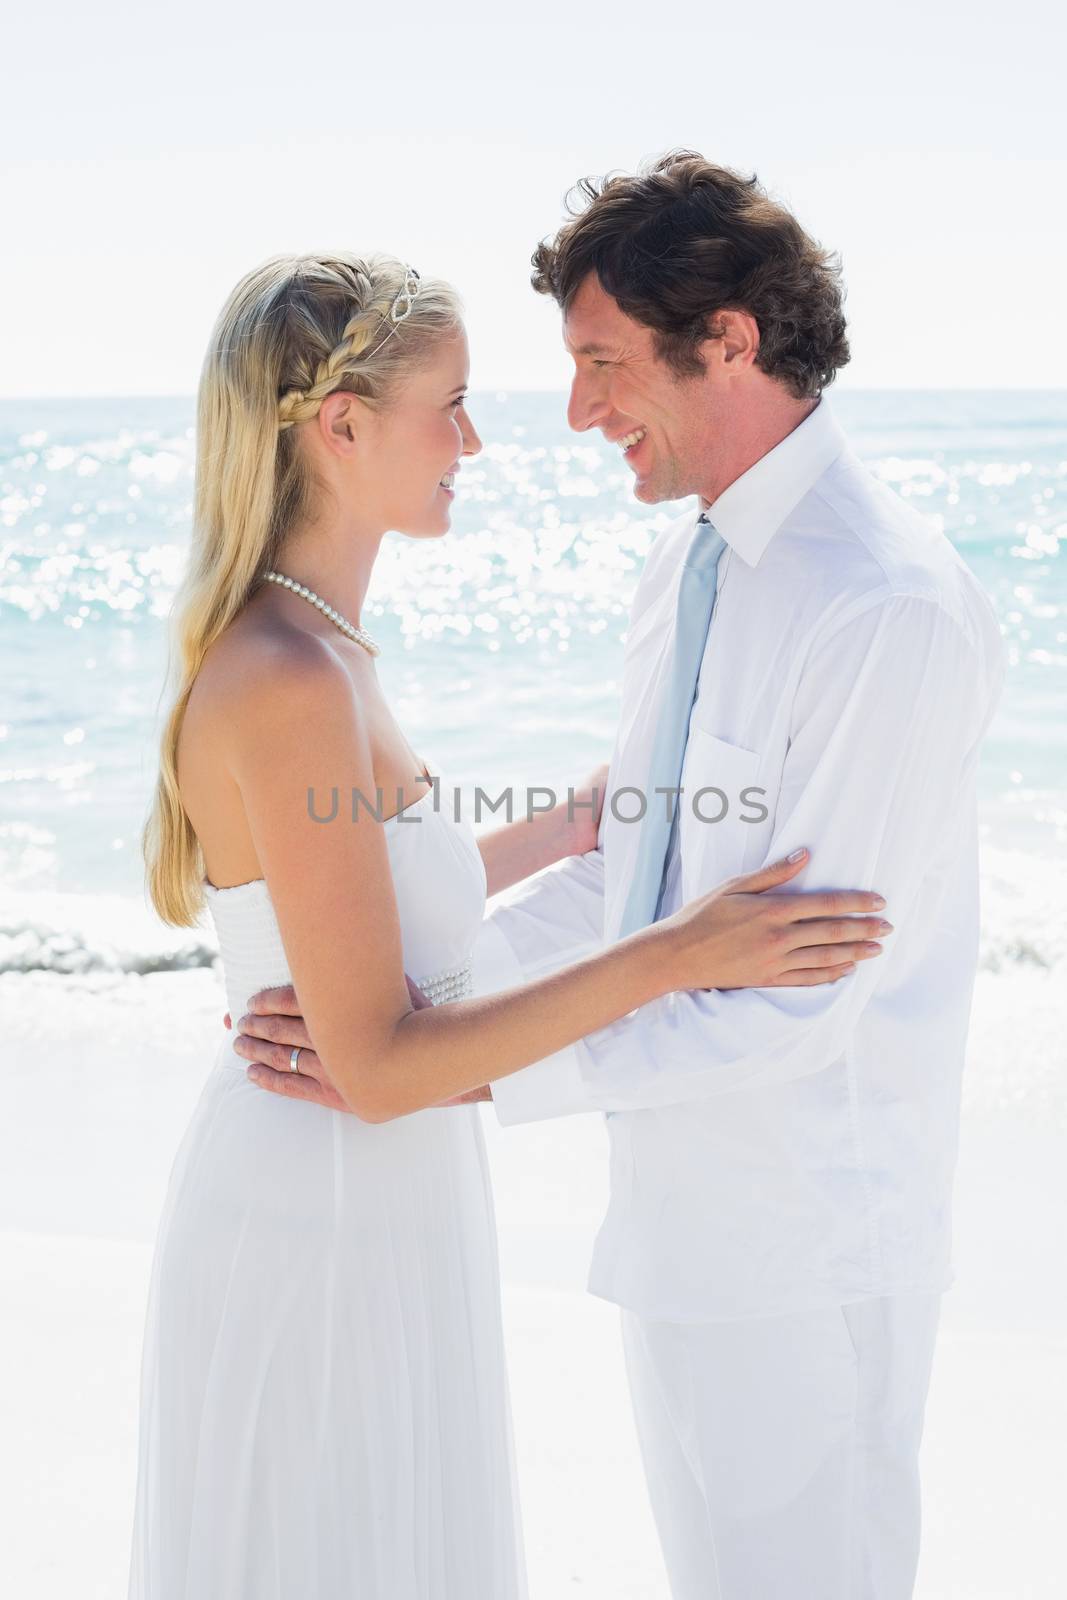 Romantic happy couple on their wedding day  by Wavebreakmedia